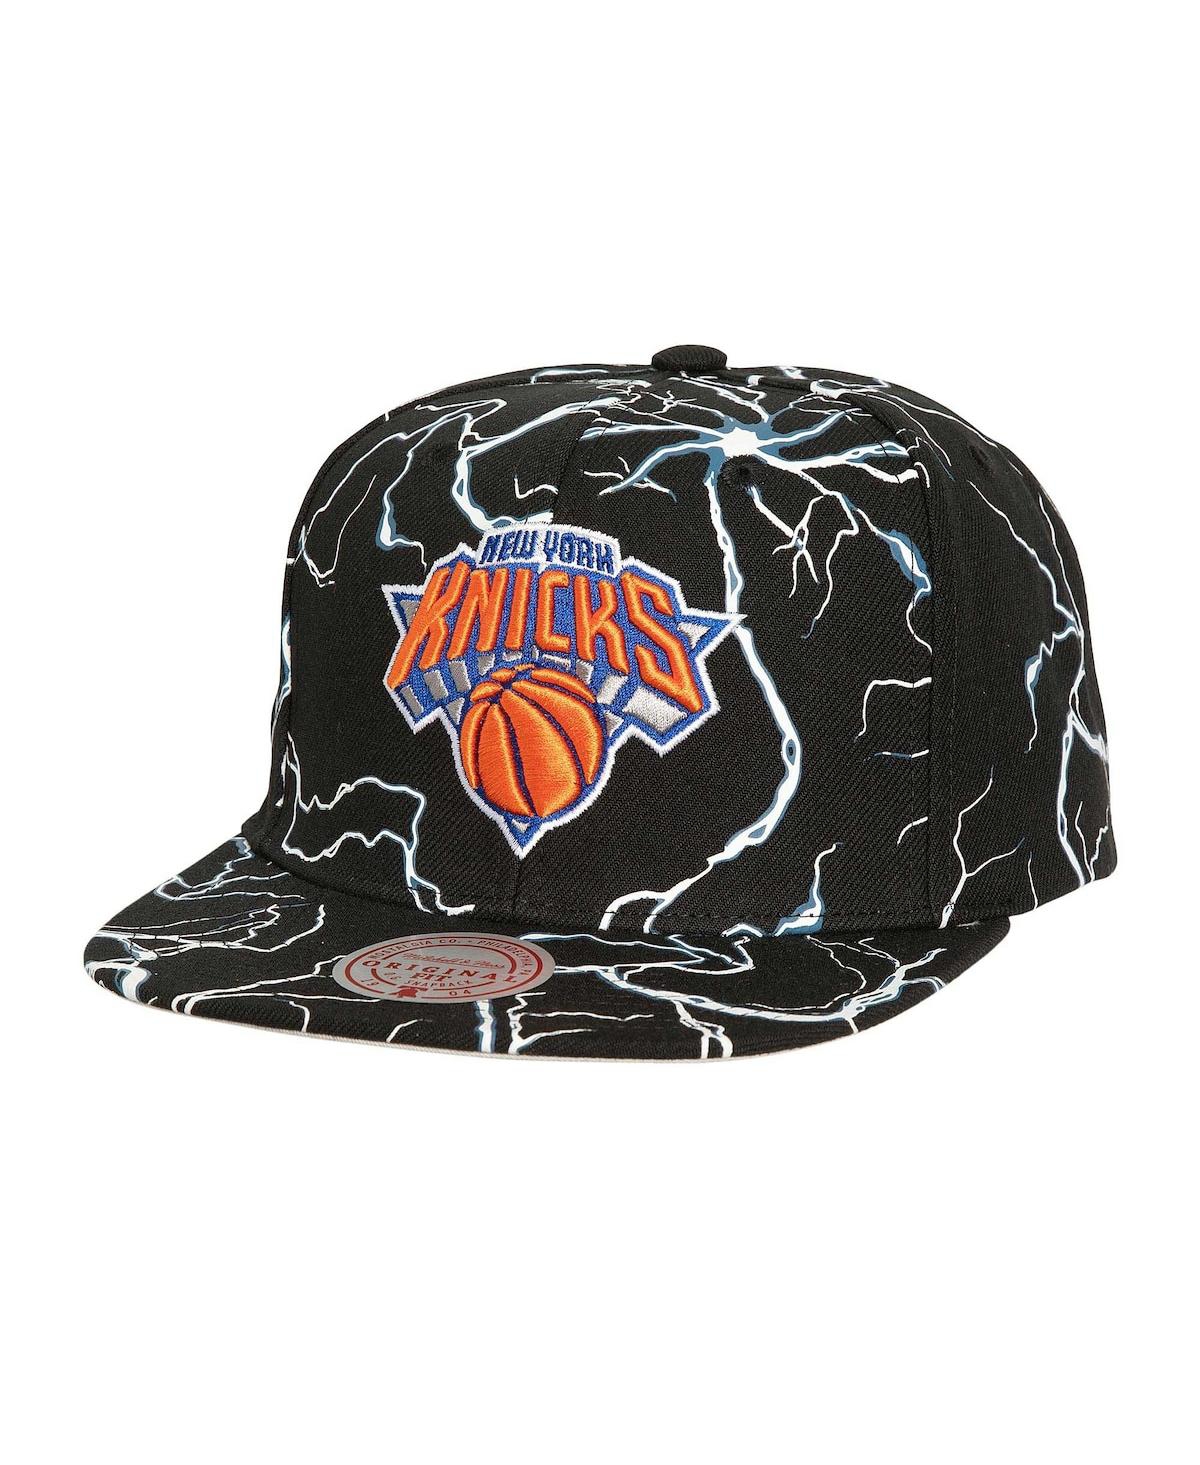 Mitchell Ness Men's Black New York Knicks Storm Season Snapback Hat - Black